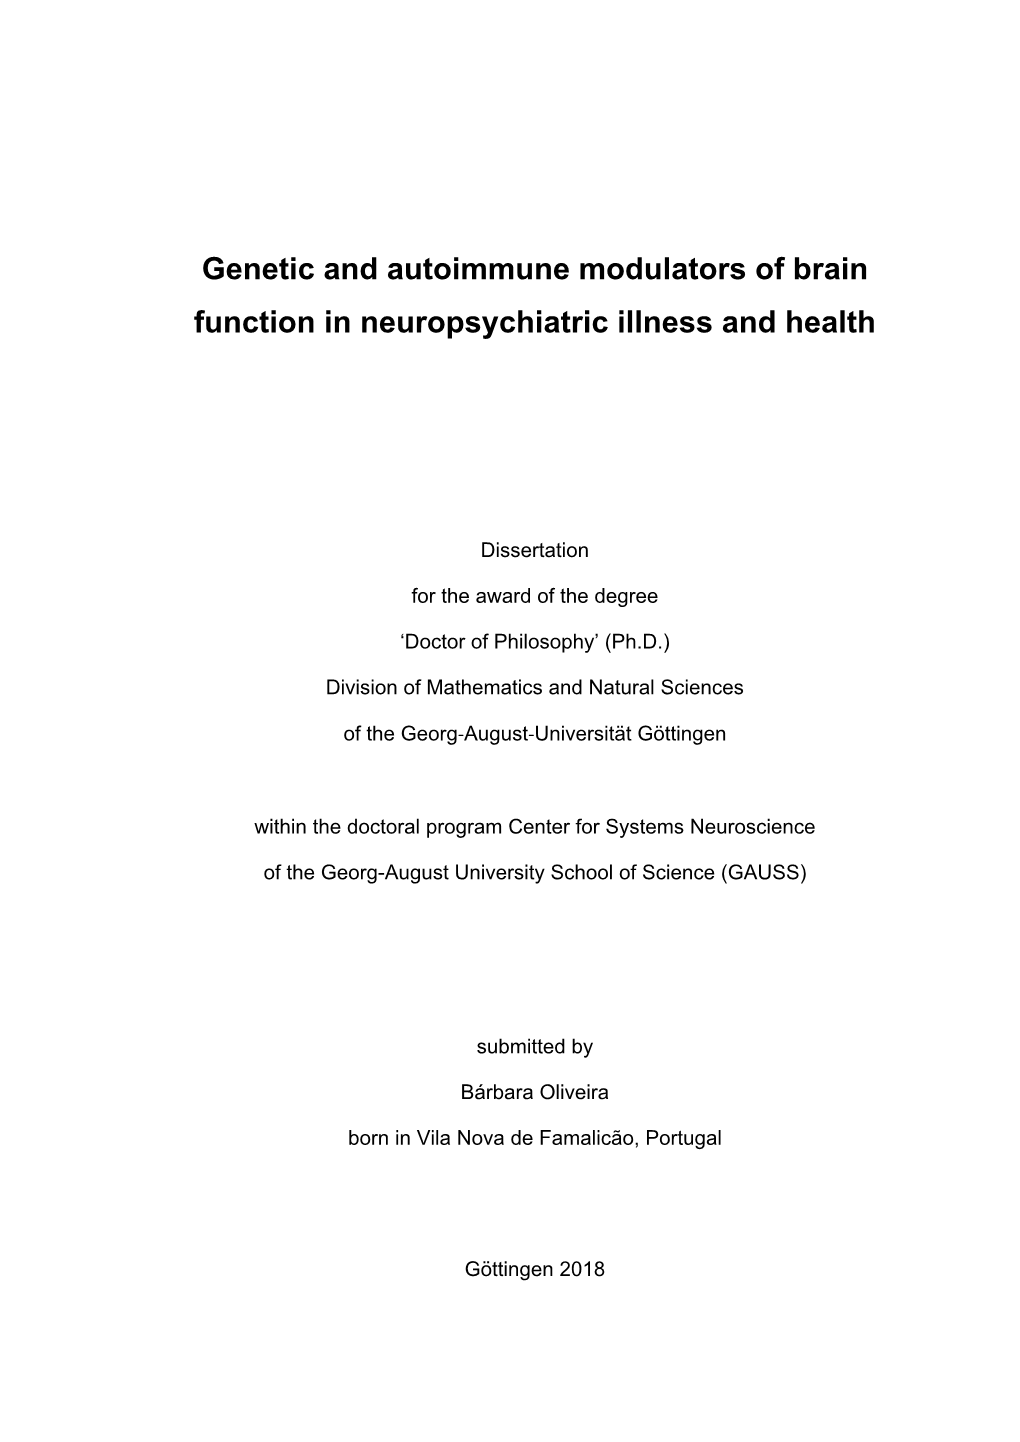 Genetic and Autoimmune Modulators of Brain Function in Neuropsychiatric Illness and Health